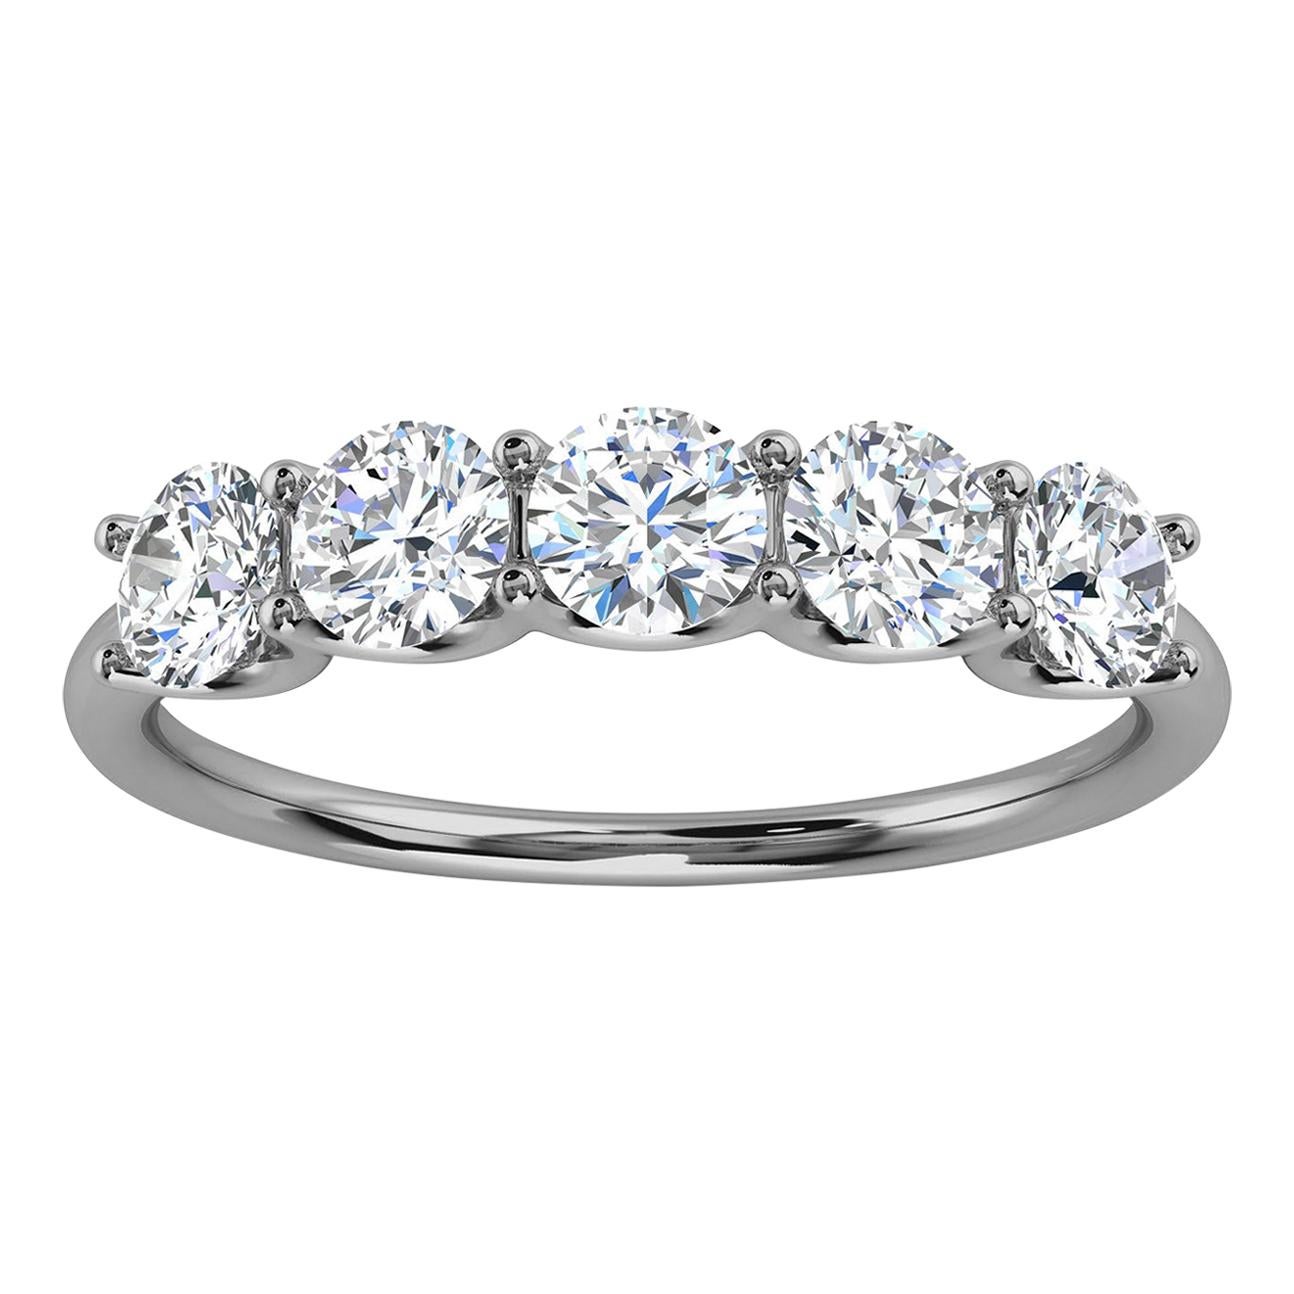 14k White Gold Sevilla Diamond Ring '1 Ct. Tw' For Sale